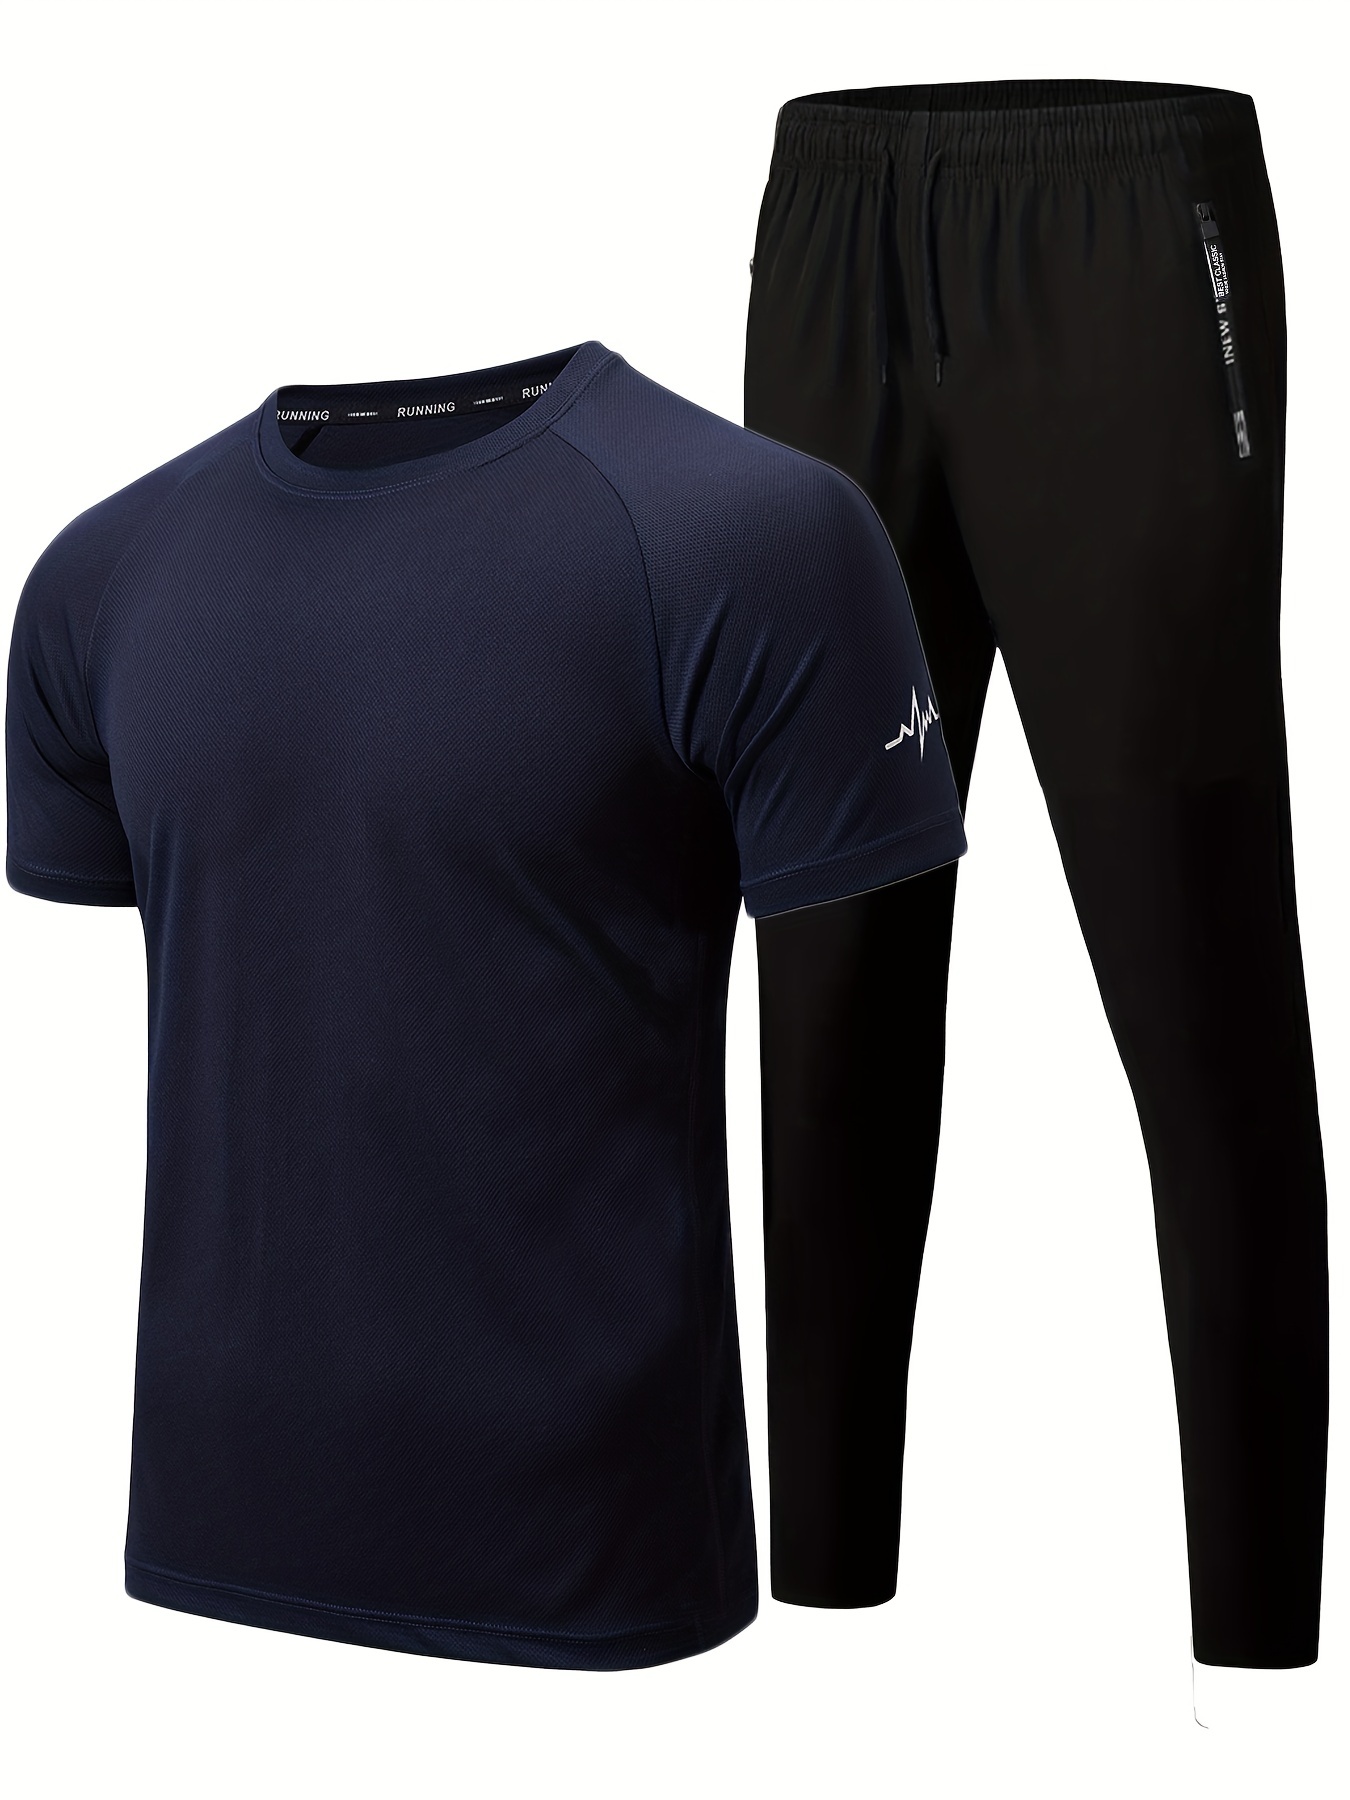 TLF Ares Joggers  Leg day workouts, Workout shirts, Mens jogger pants